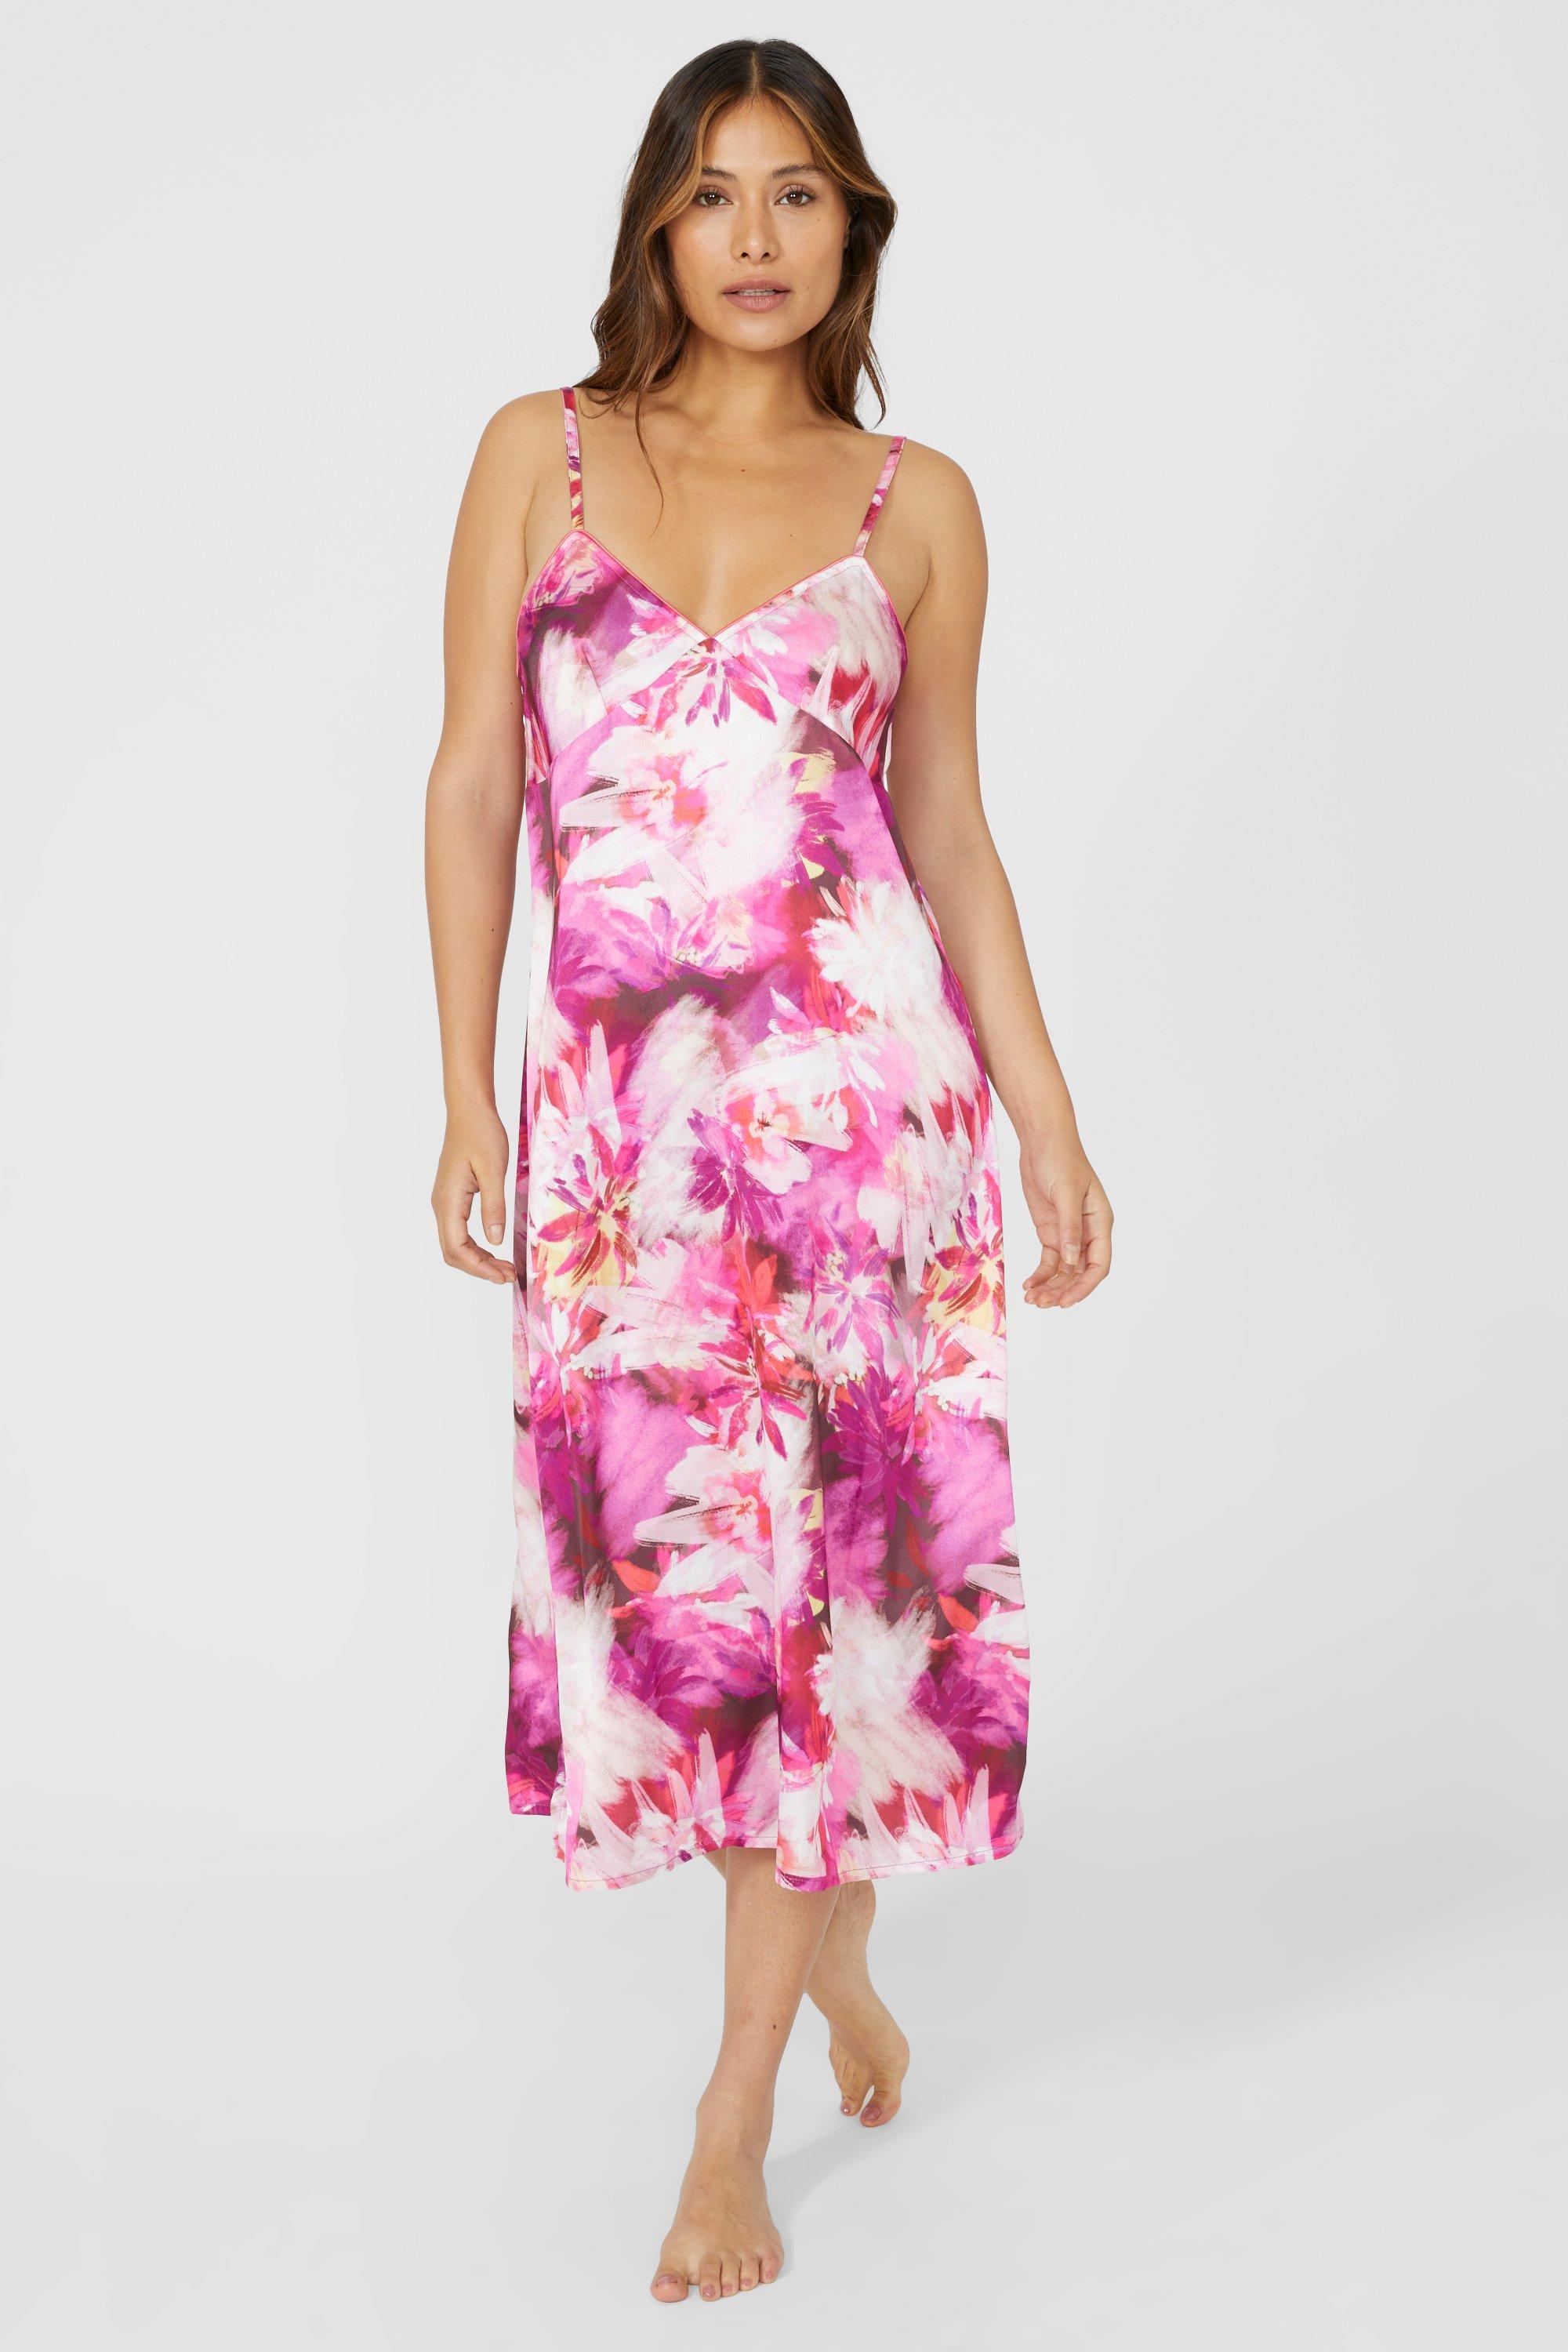 Debenhams Women's Cameilia Floral Night Dress|Size: 8|pink